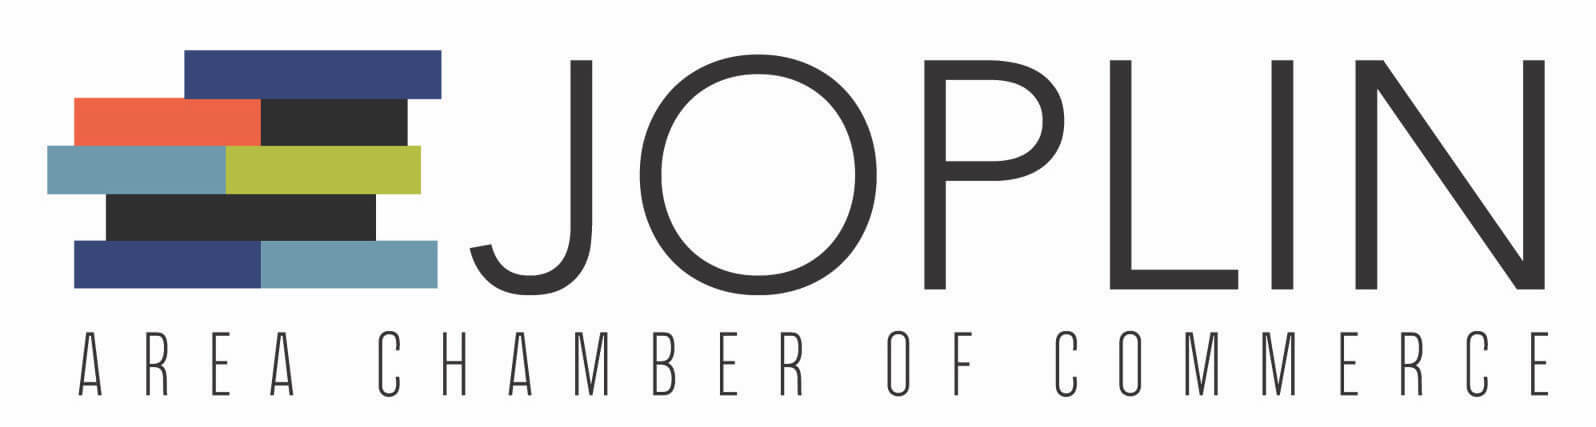 joplin-area-chamber-of-commerce-6